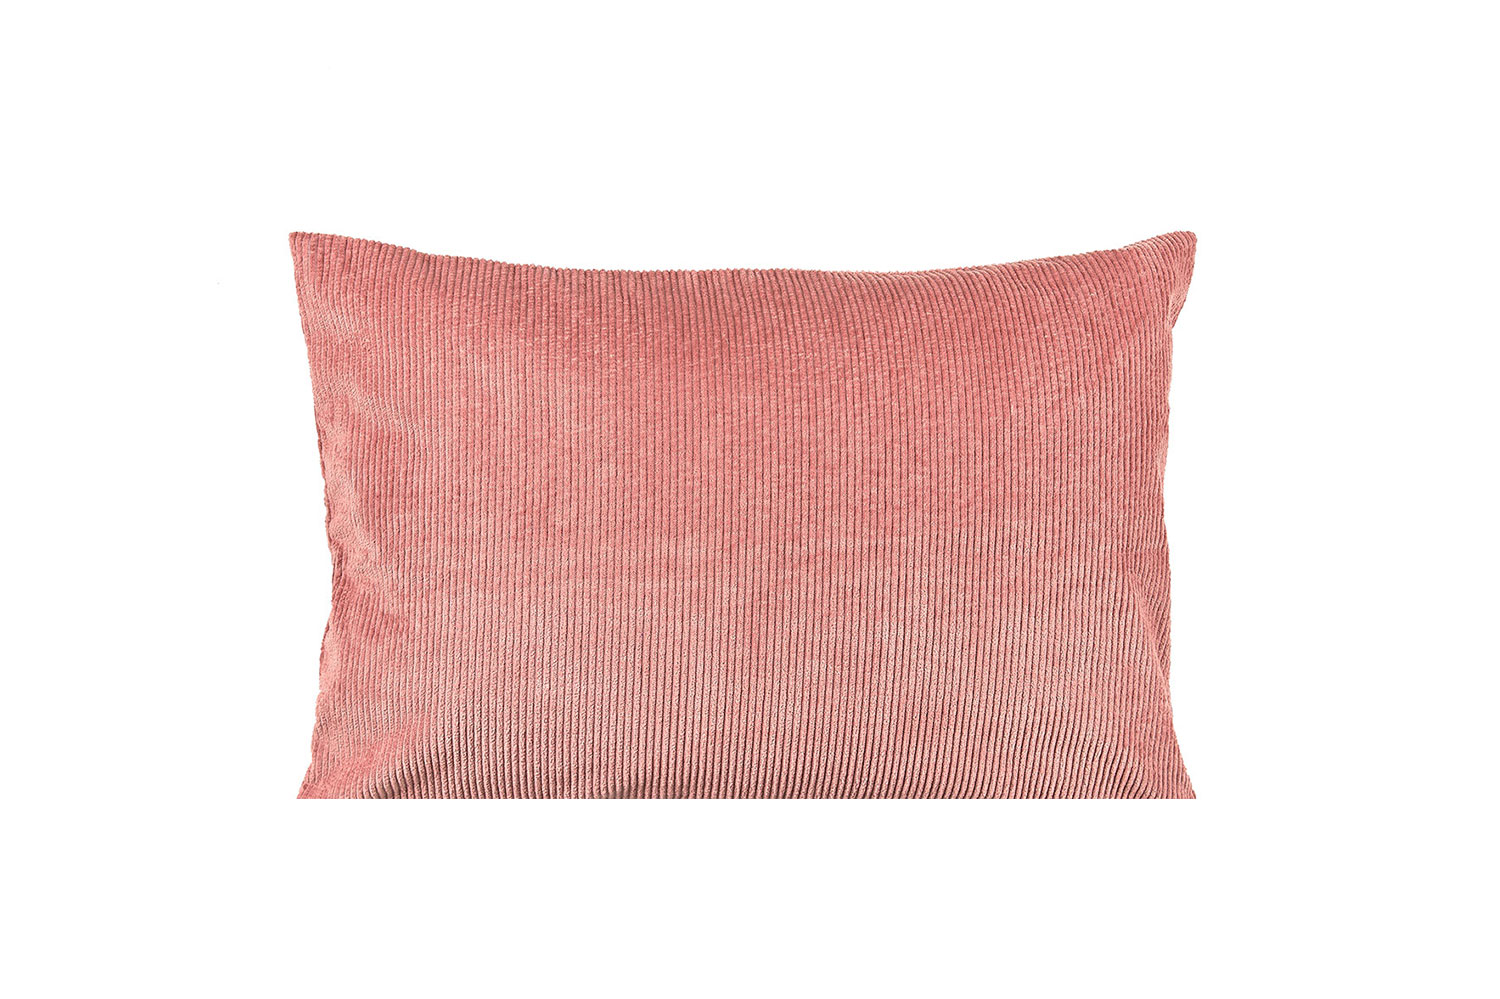 
Striped cotton pillow